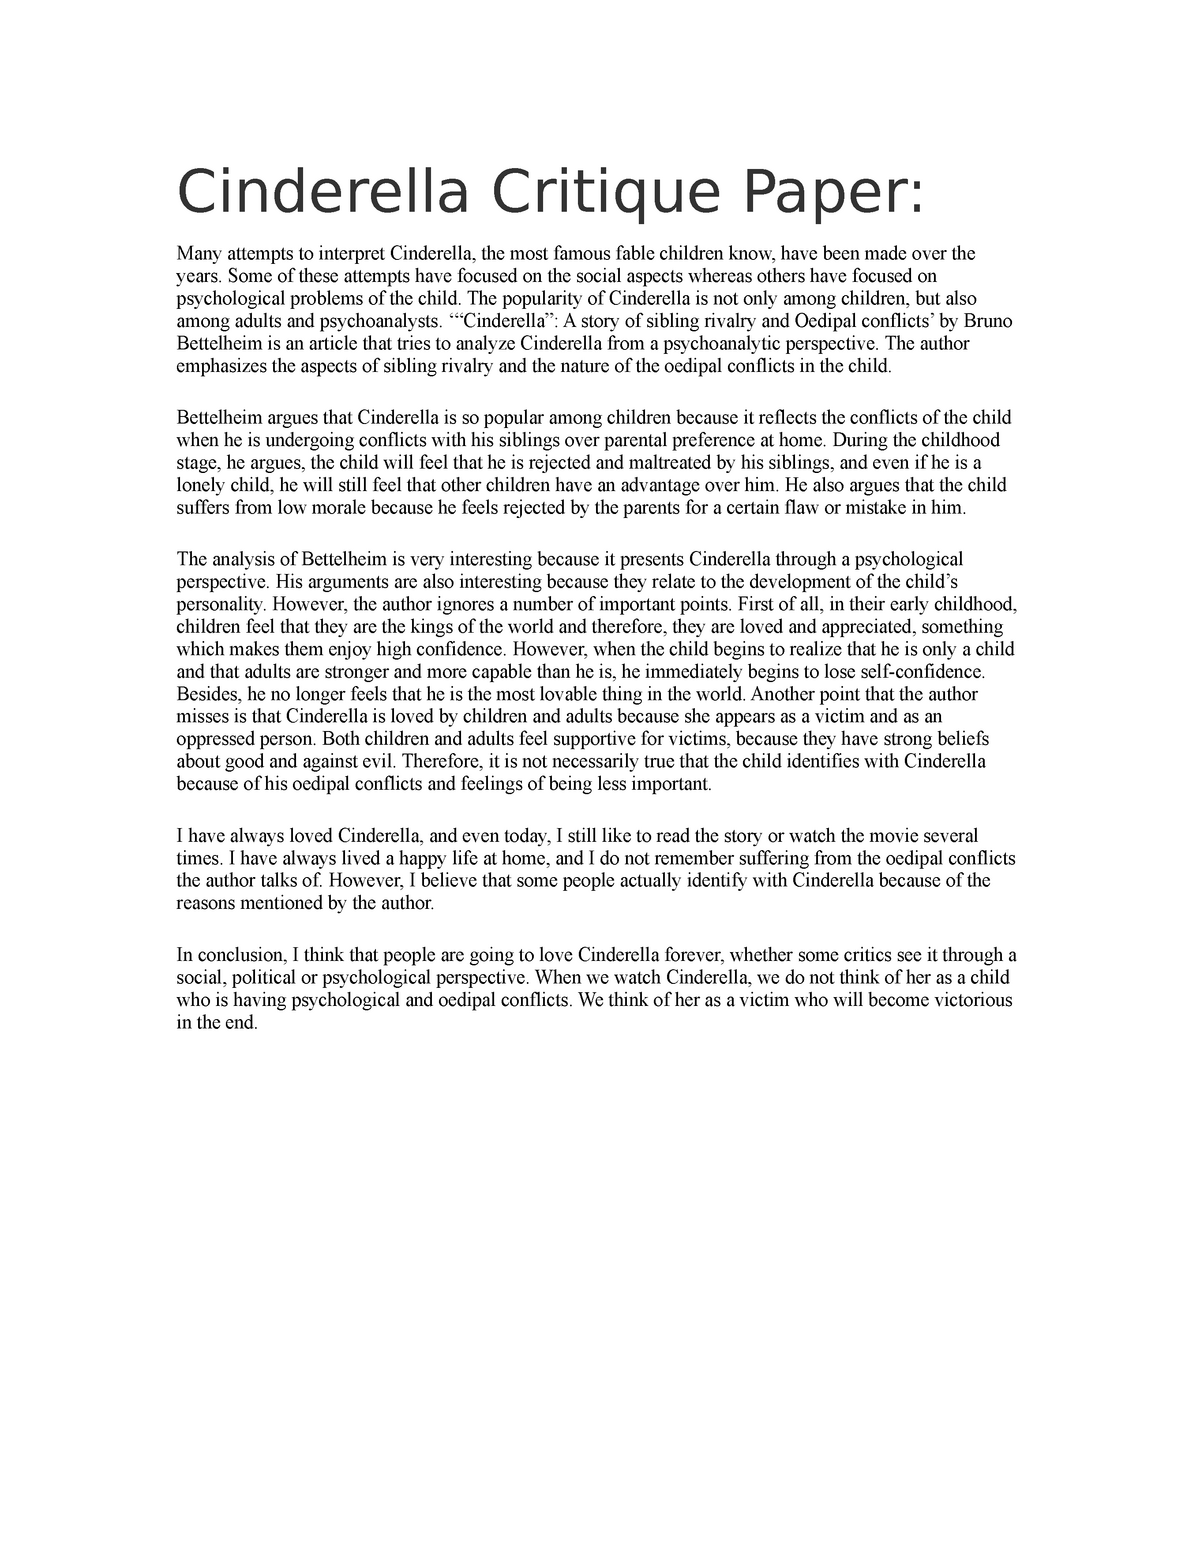 Cinderella Critique Paper Cinderella Critique Paper Many Attempts To Interpret Cinderella 